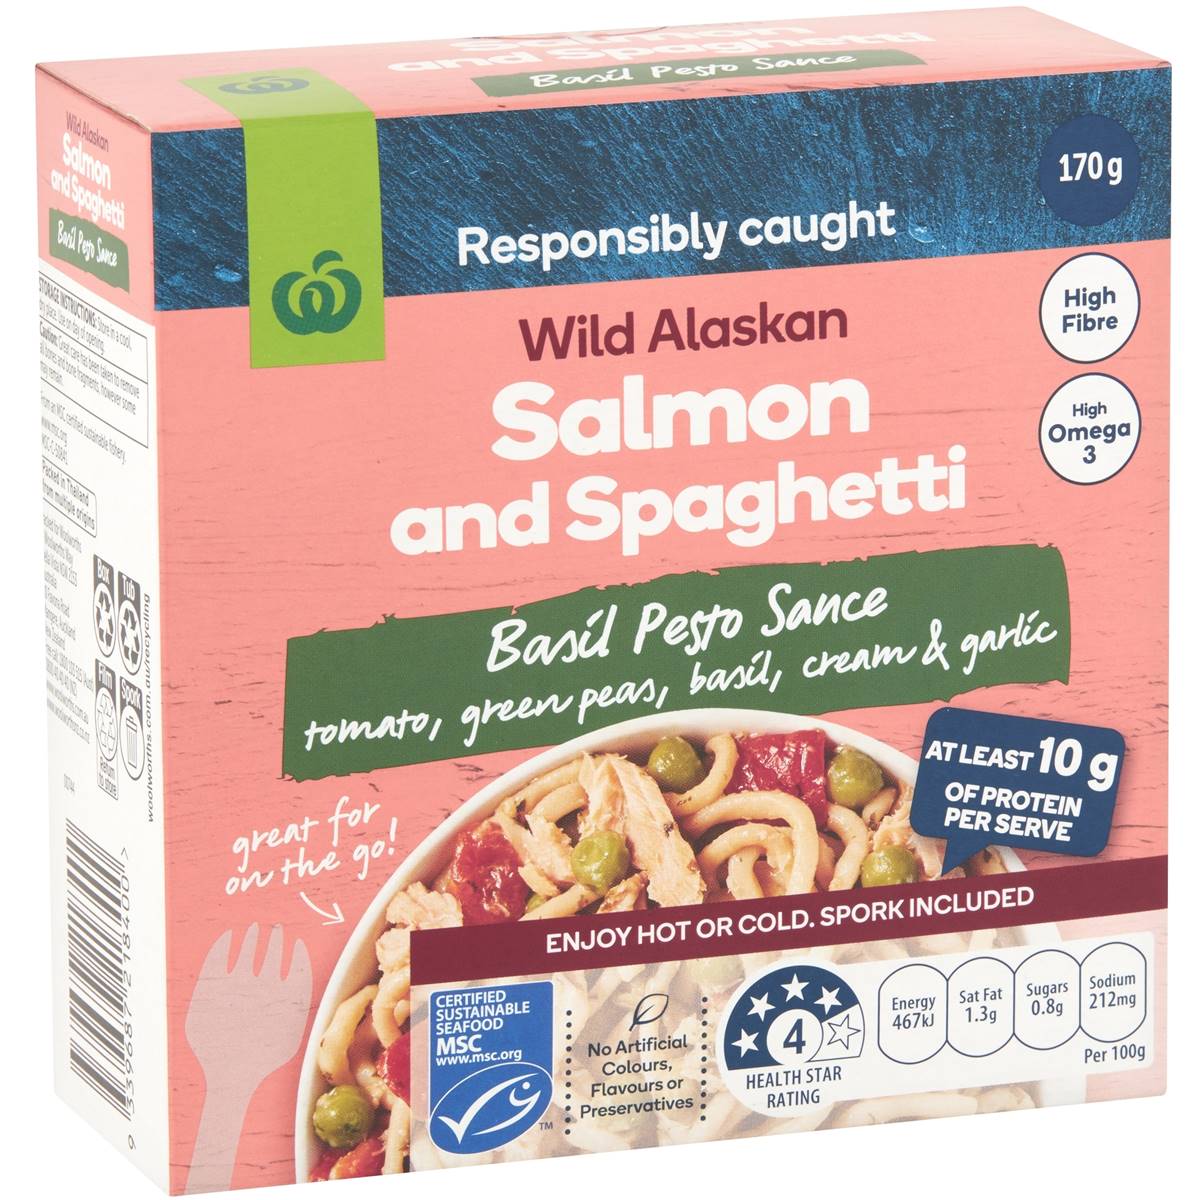 Calories in Woolworths Wild Alaskan Salmon & Spaghetti Basil Pesto Sauce